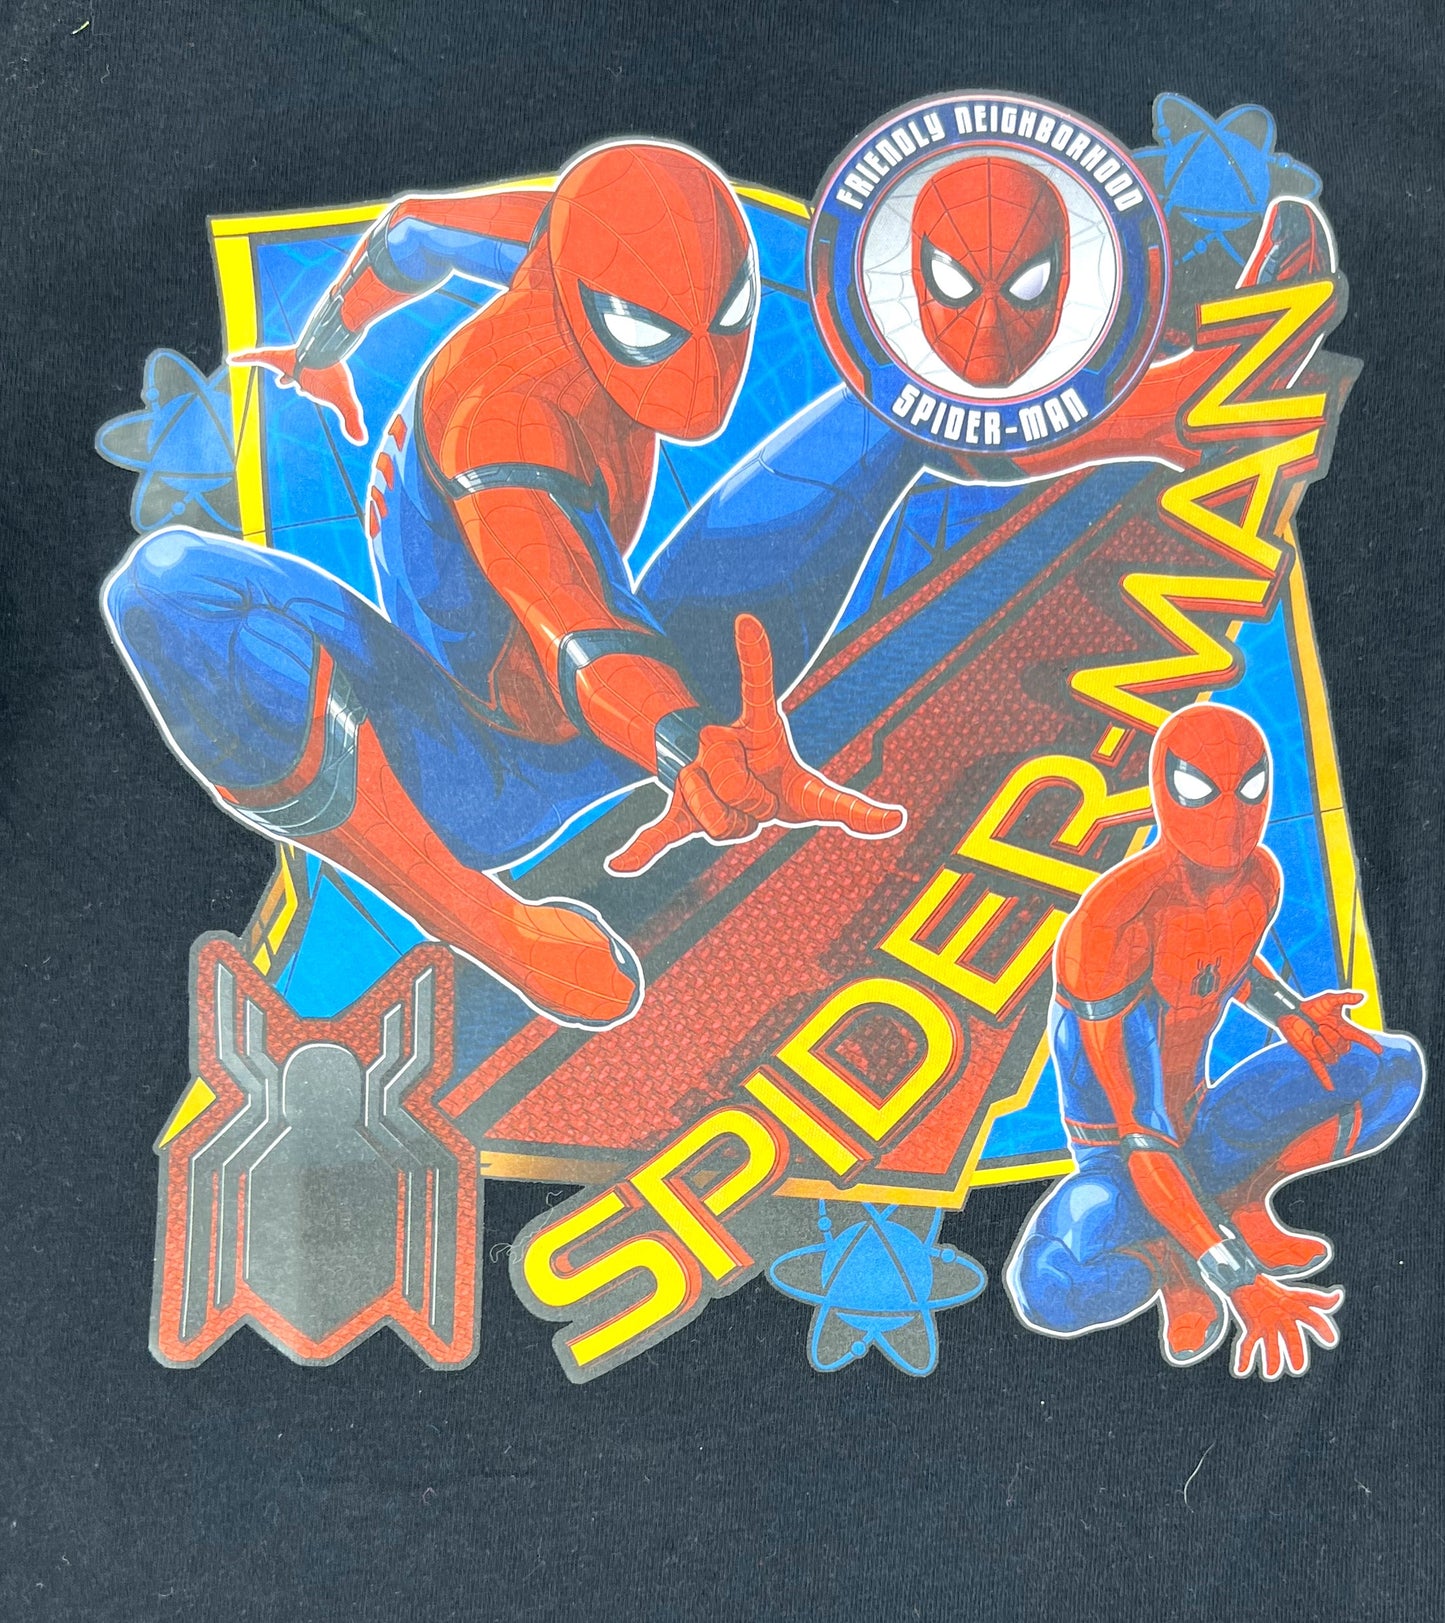 Spiderman Boys Pyjamas. 18 Months-12 Yrs Marvel Spider-Man Superhero PJ's